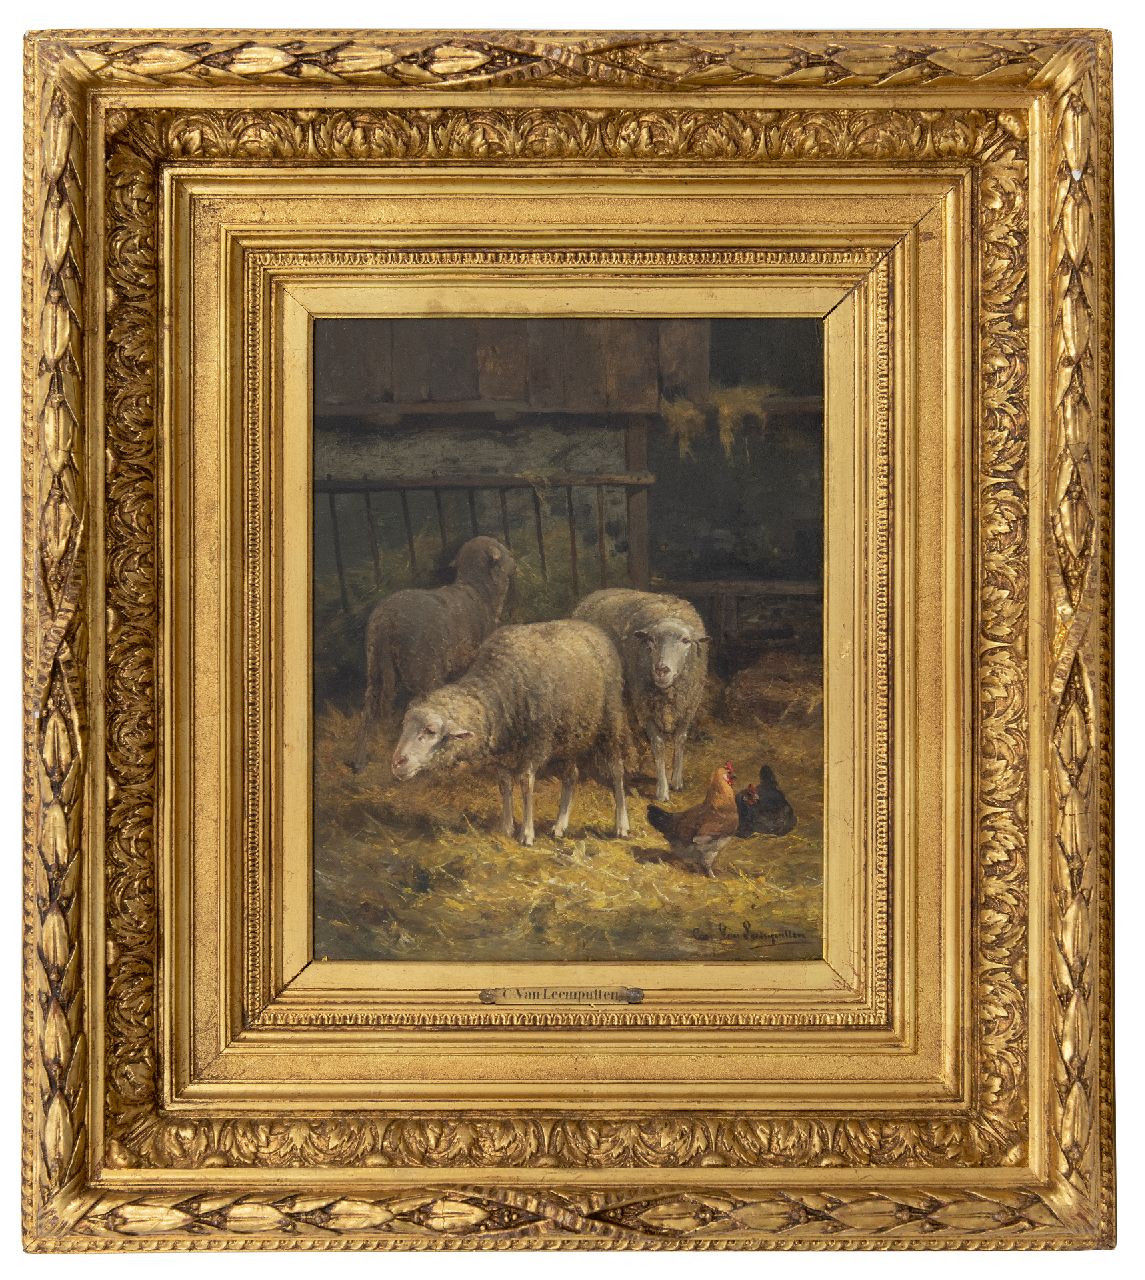 Leemputten C. van | Cornelis van Leemputten | Paintings offered for sale | sheep in the barn, oil on panel 40.0 x 31.7 cm, signed l.r.